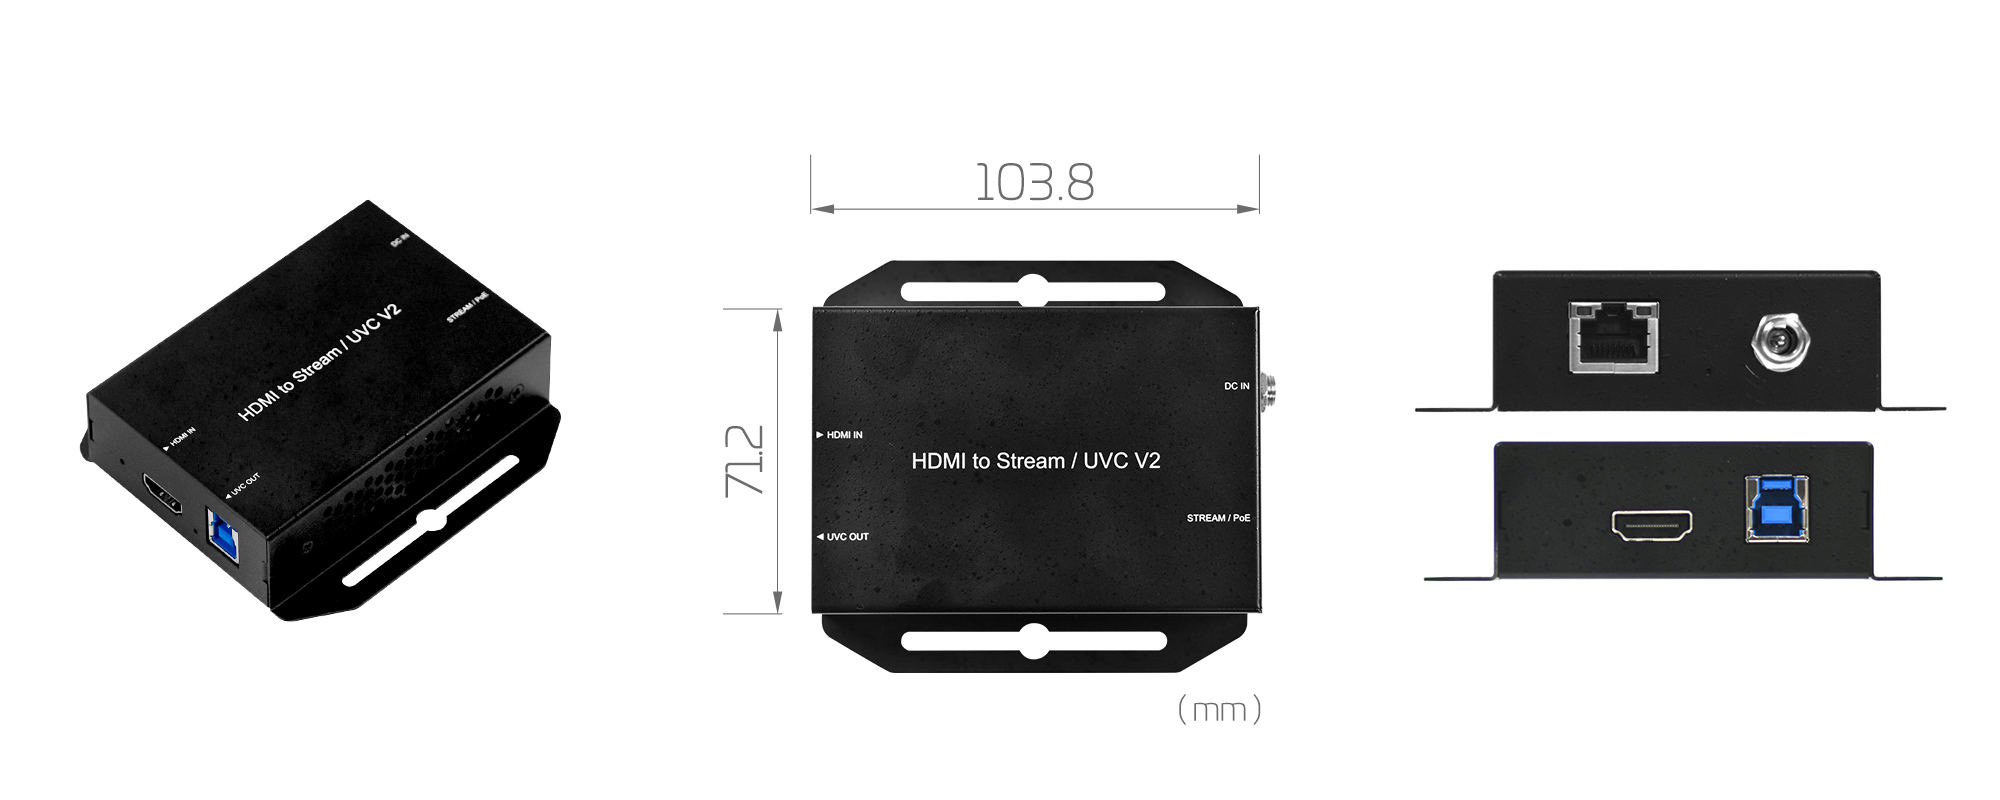 SC6E0N1 HDMI to IP/UVC V2